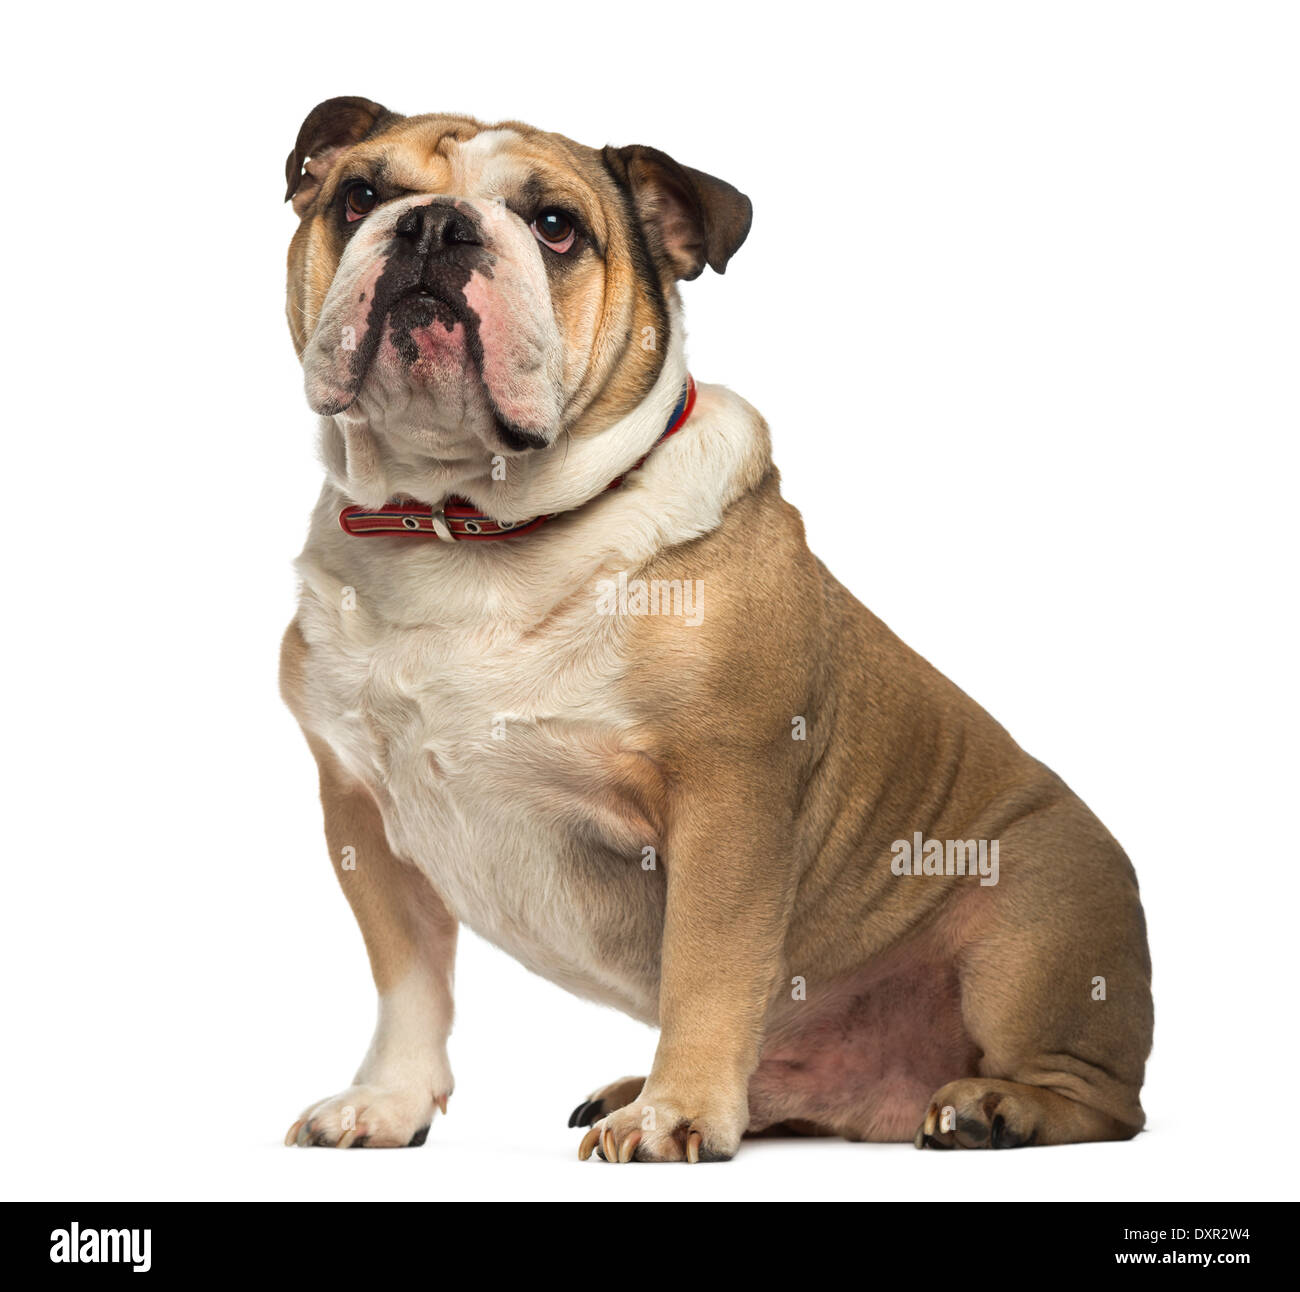 English Bulldog sitting and looking up against white background Stock Photo